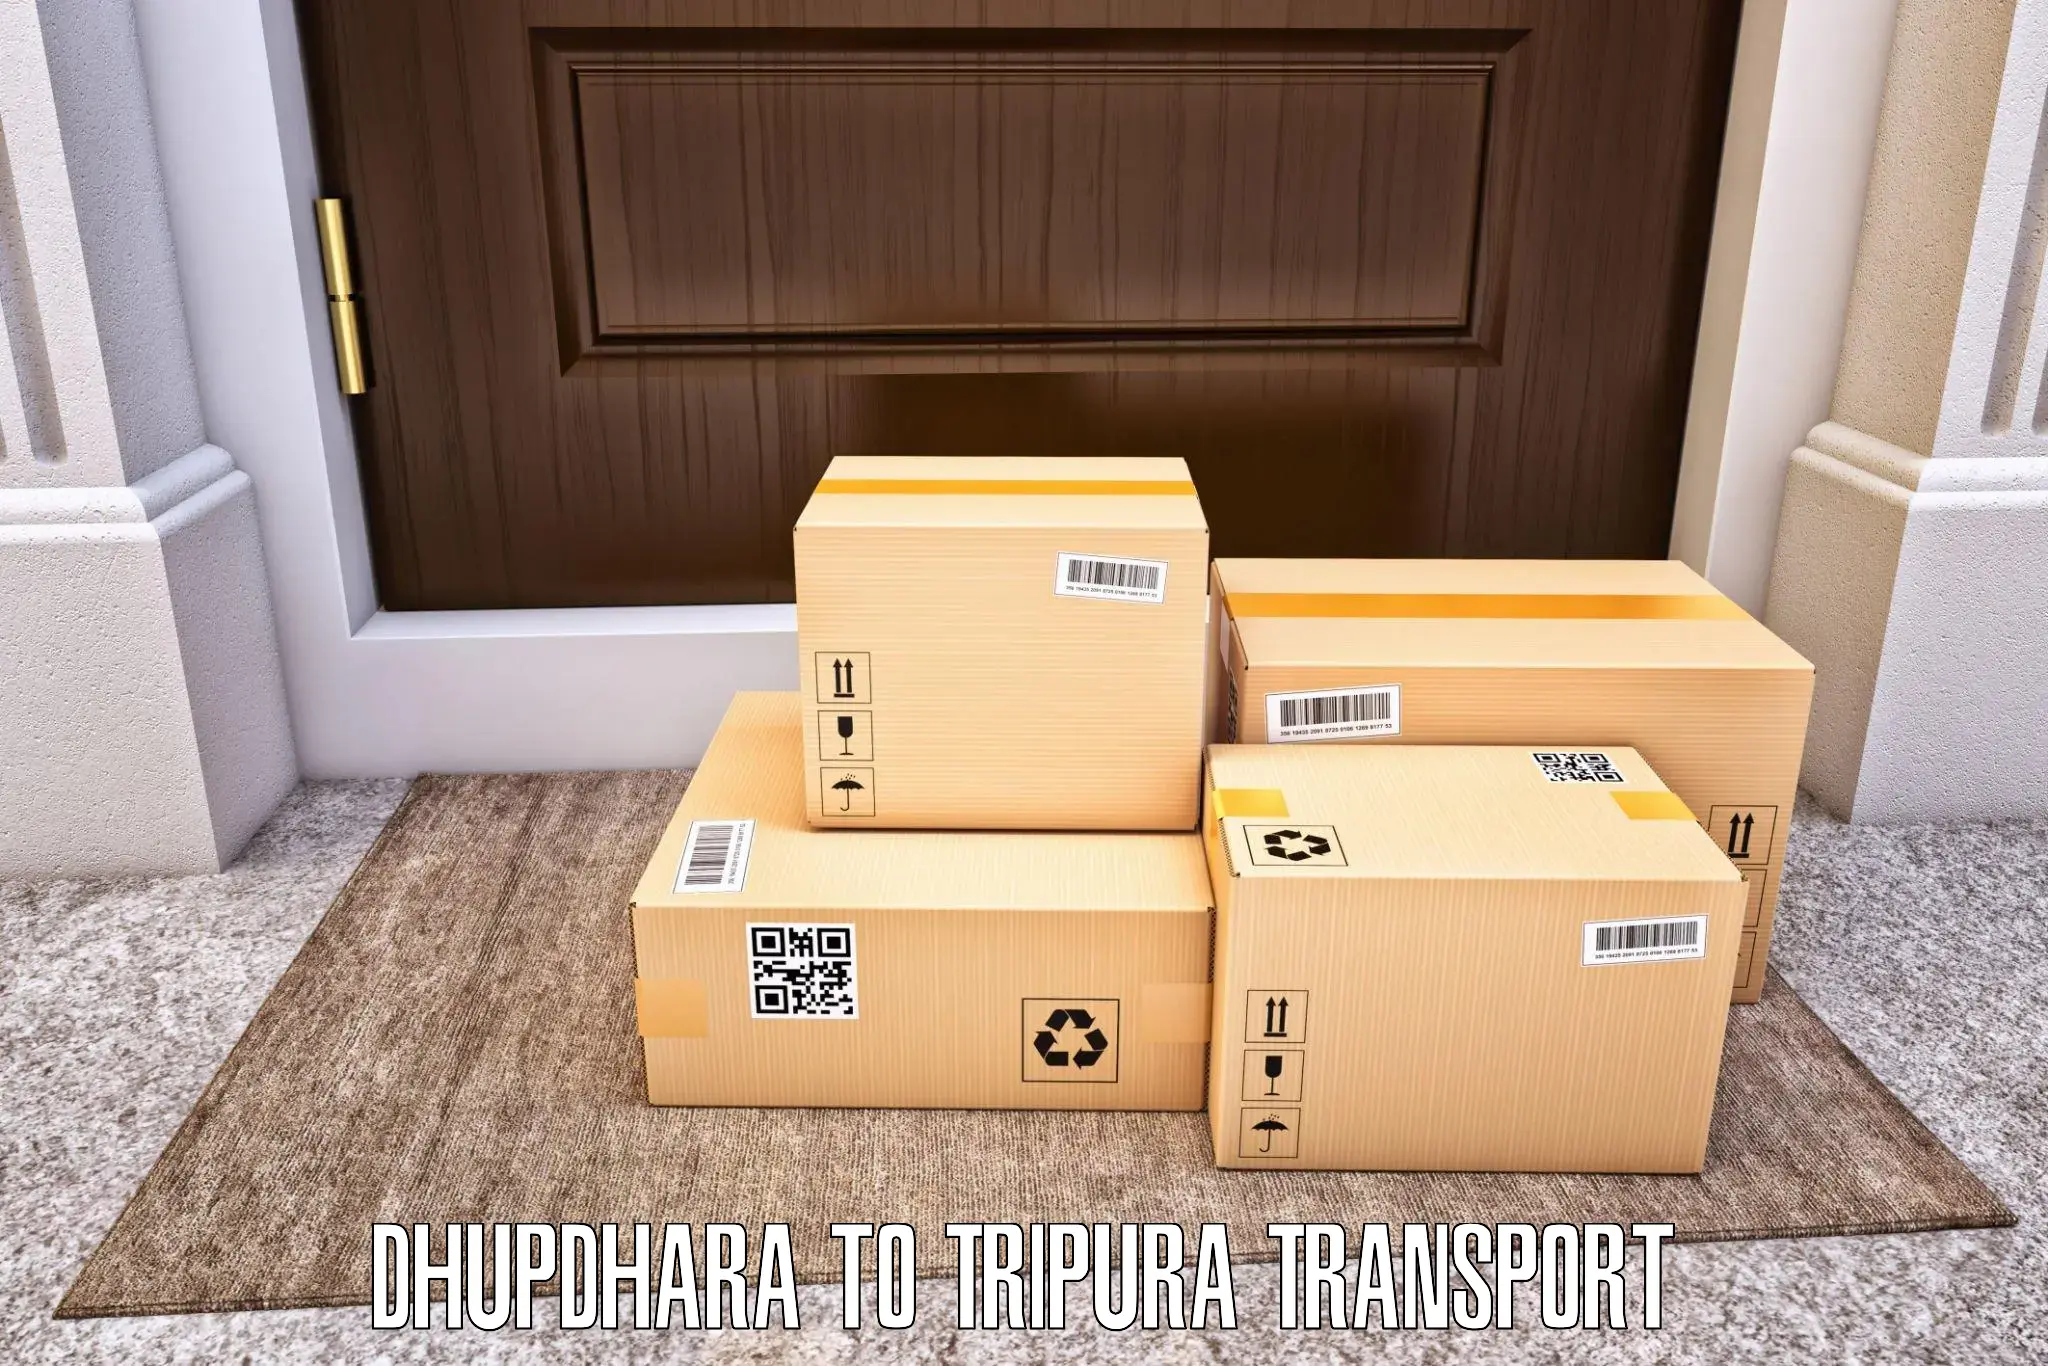 Transport shared services Dhupdhara to NIT Agartala